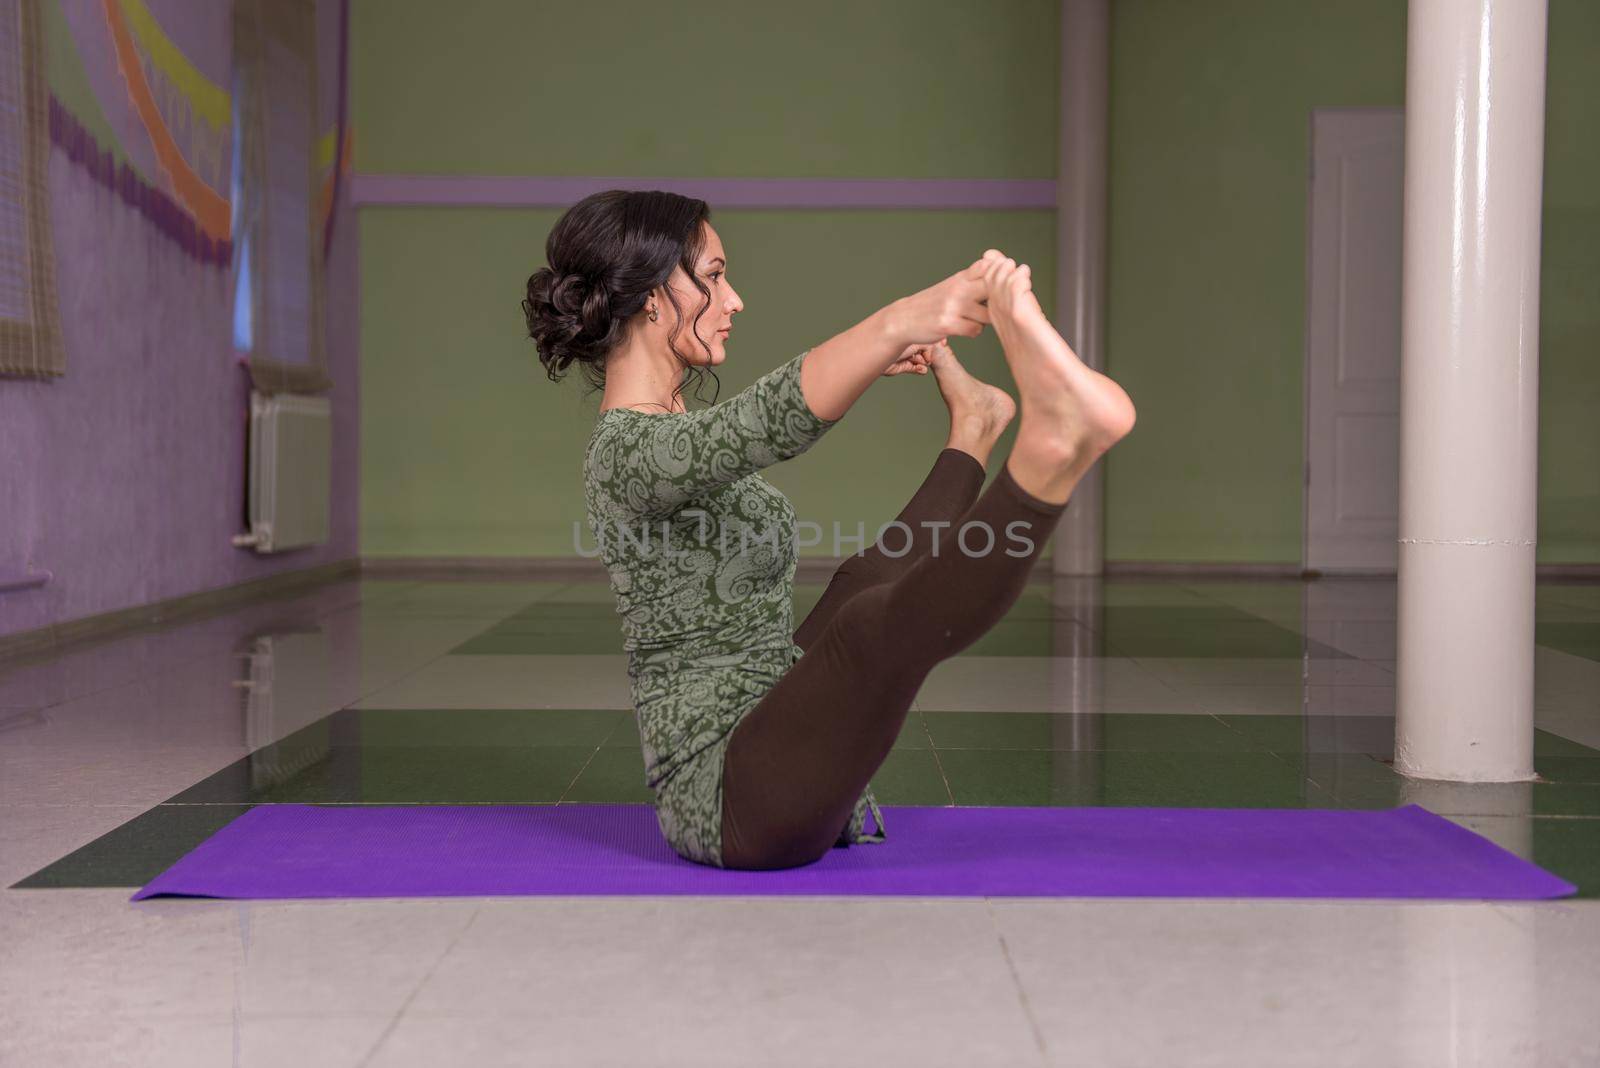 Yoga teacher works yoga exercises by Proff